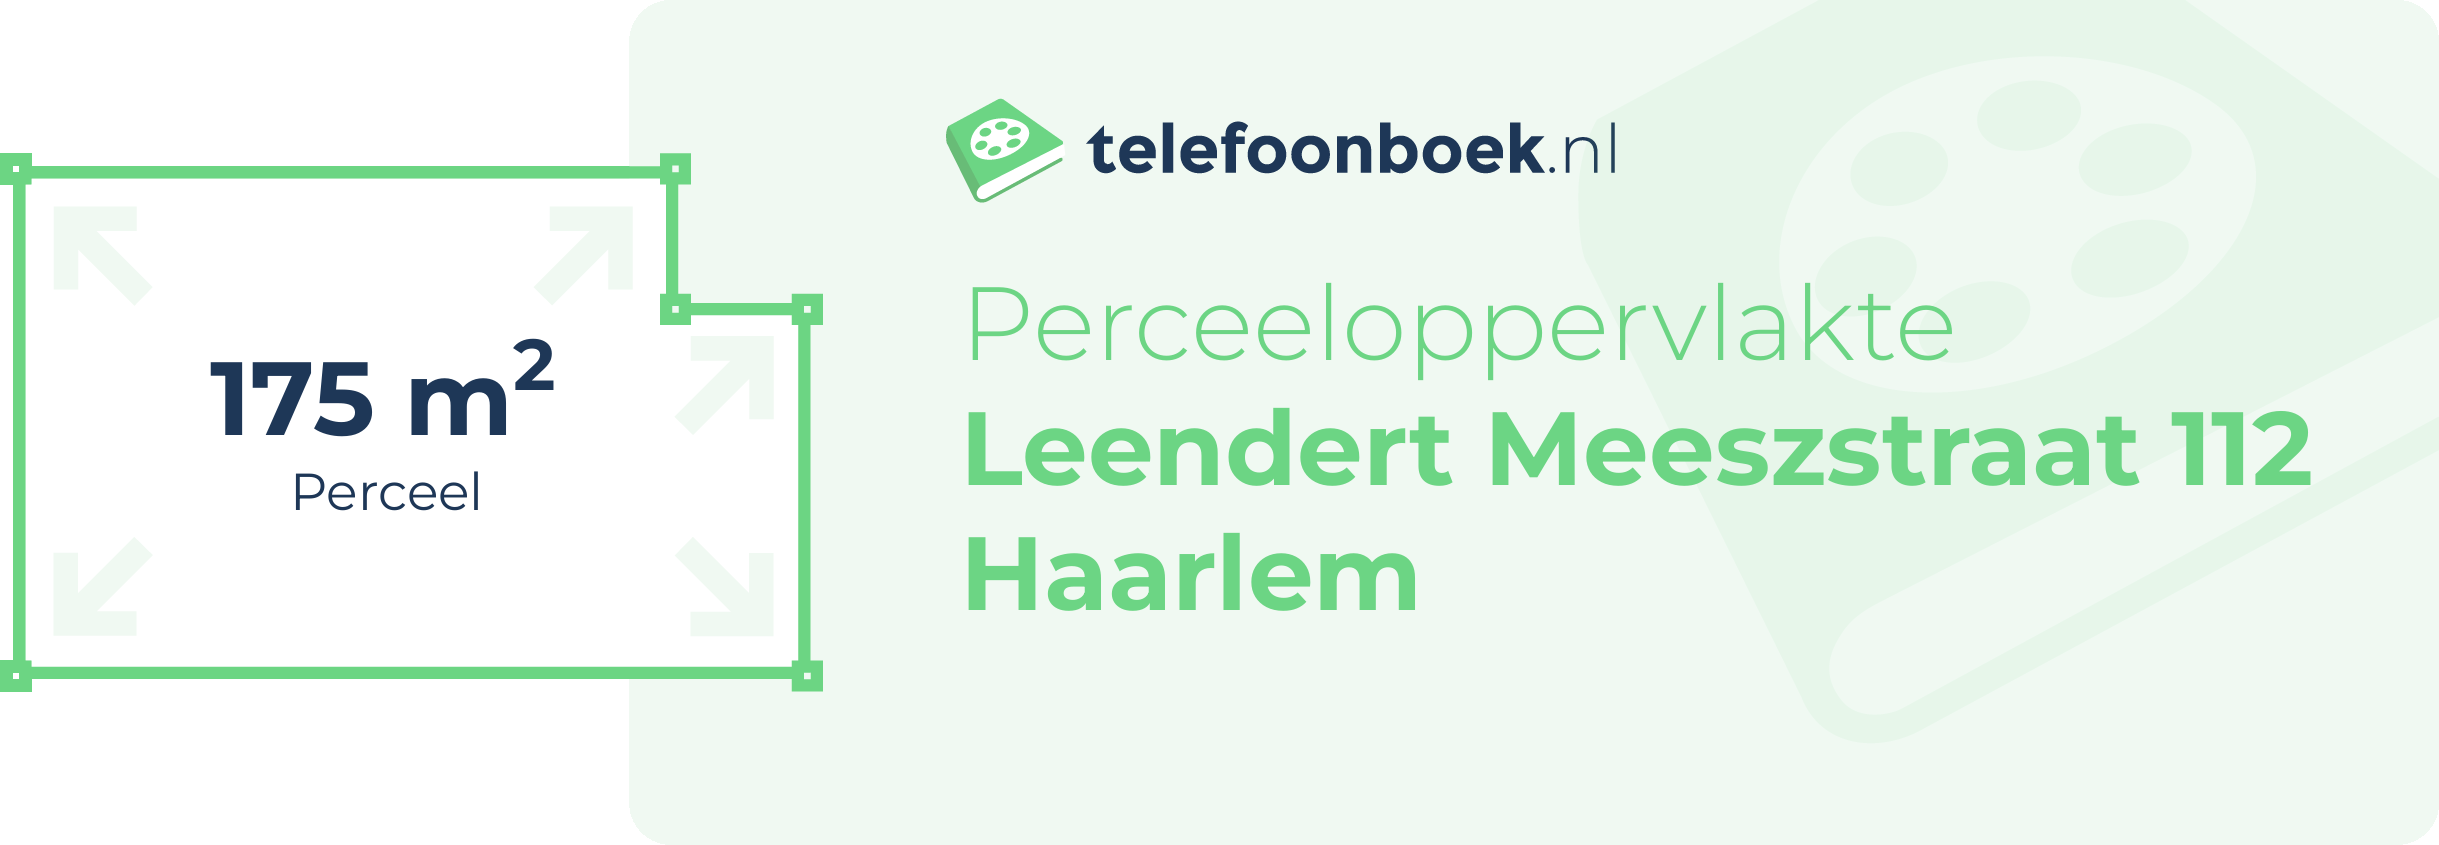 Perceeloppervlakte Leendert Meeszstraat 112 Haarlem